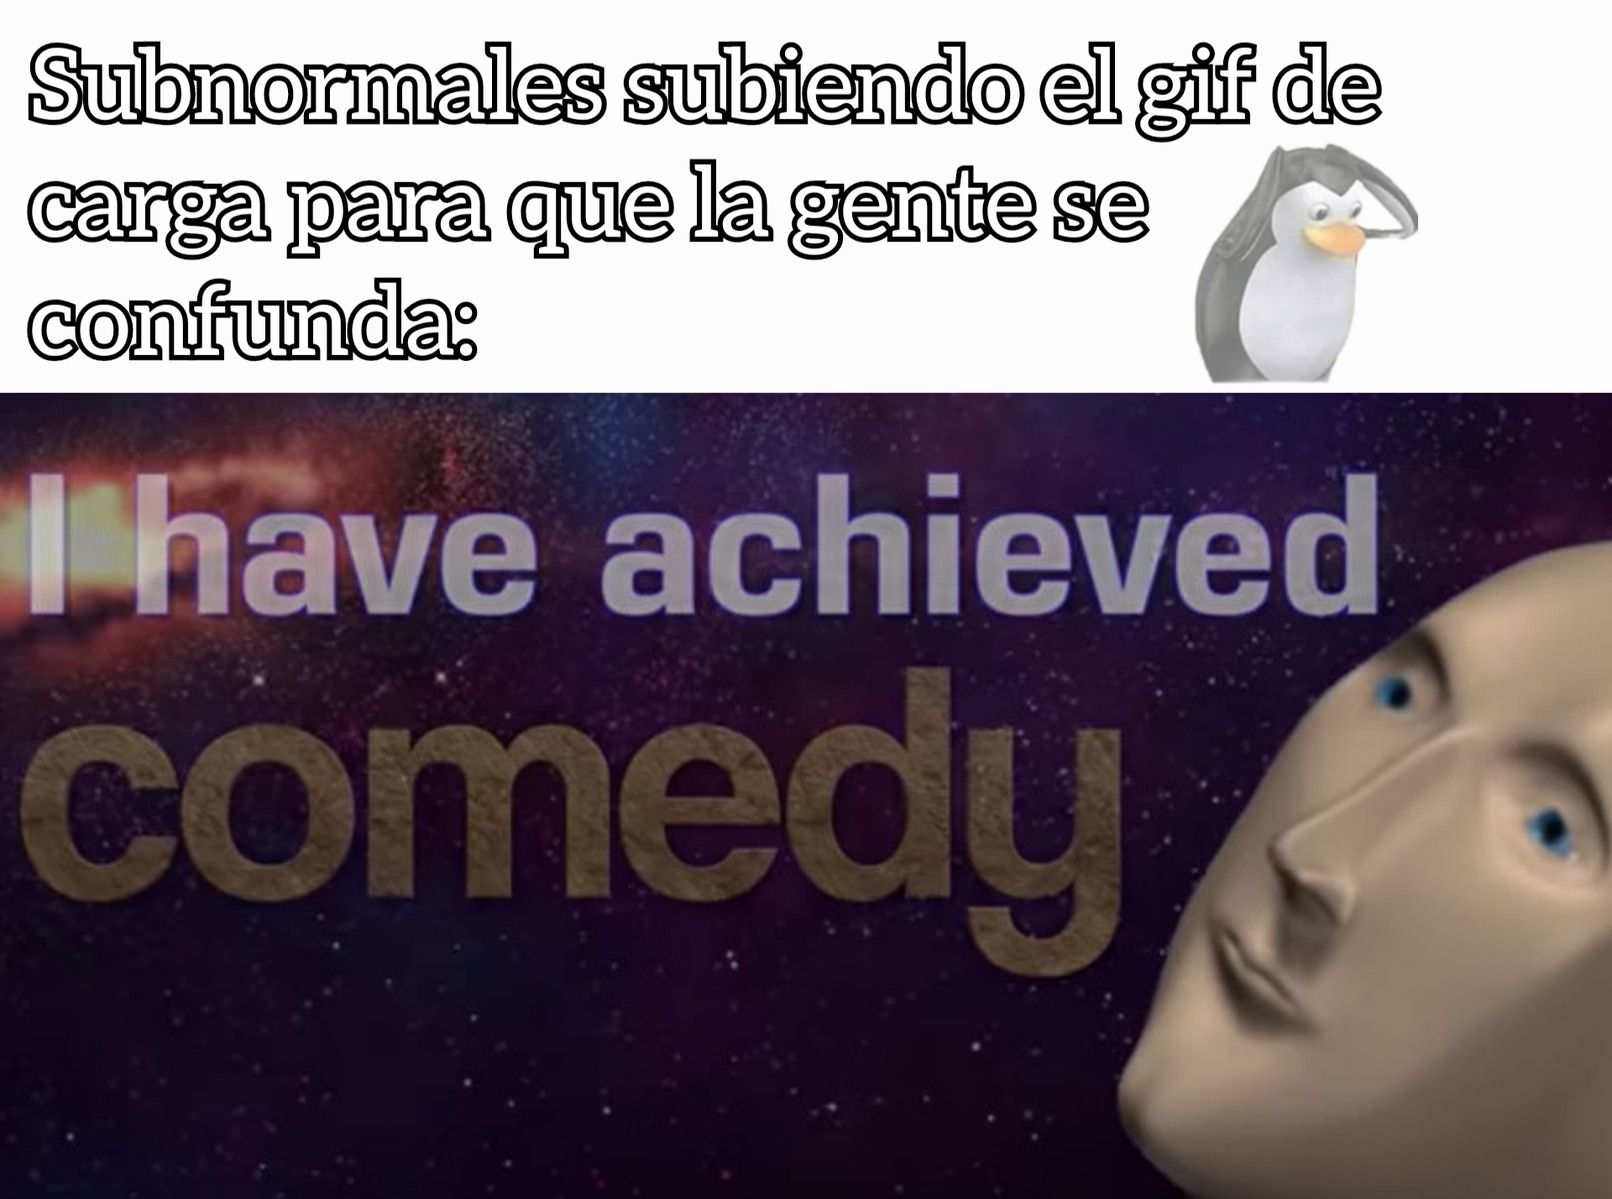 Yo haciendo este meme: "I have achieved comedy"